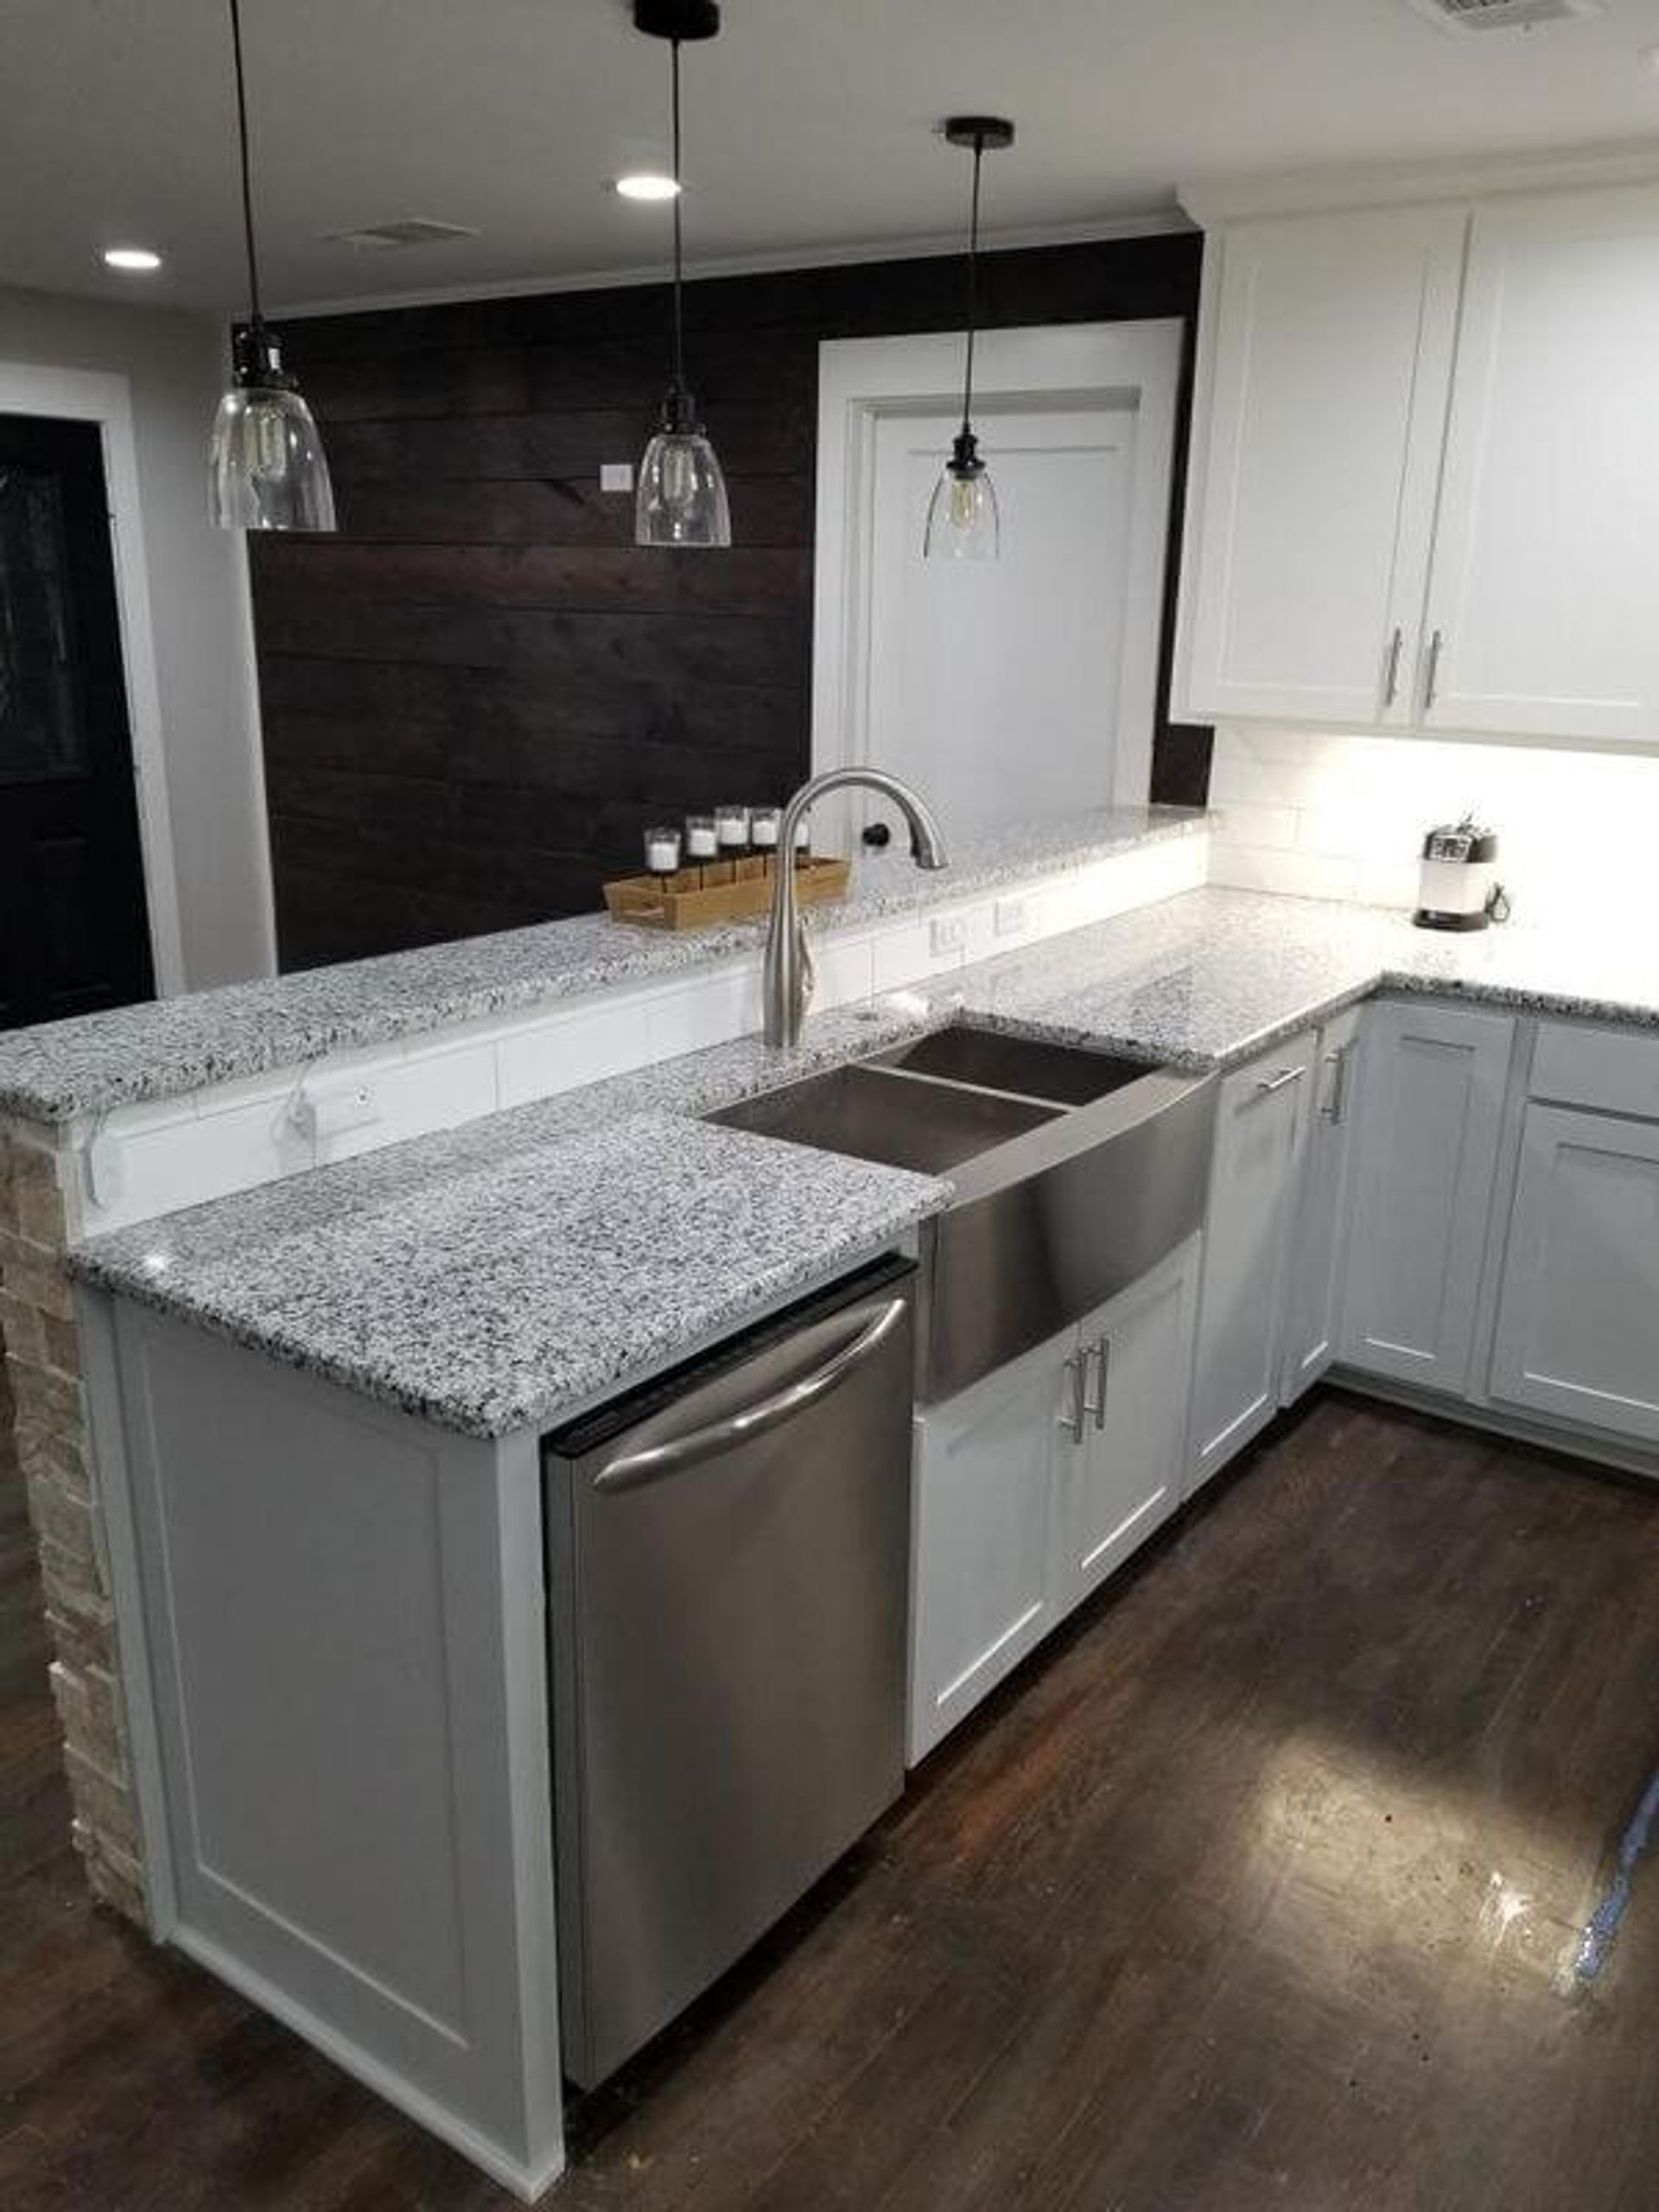 custom kitchen cabinets and kitchen lighting